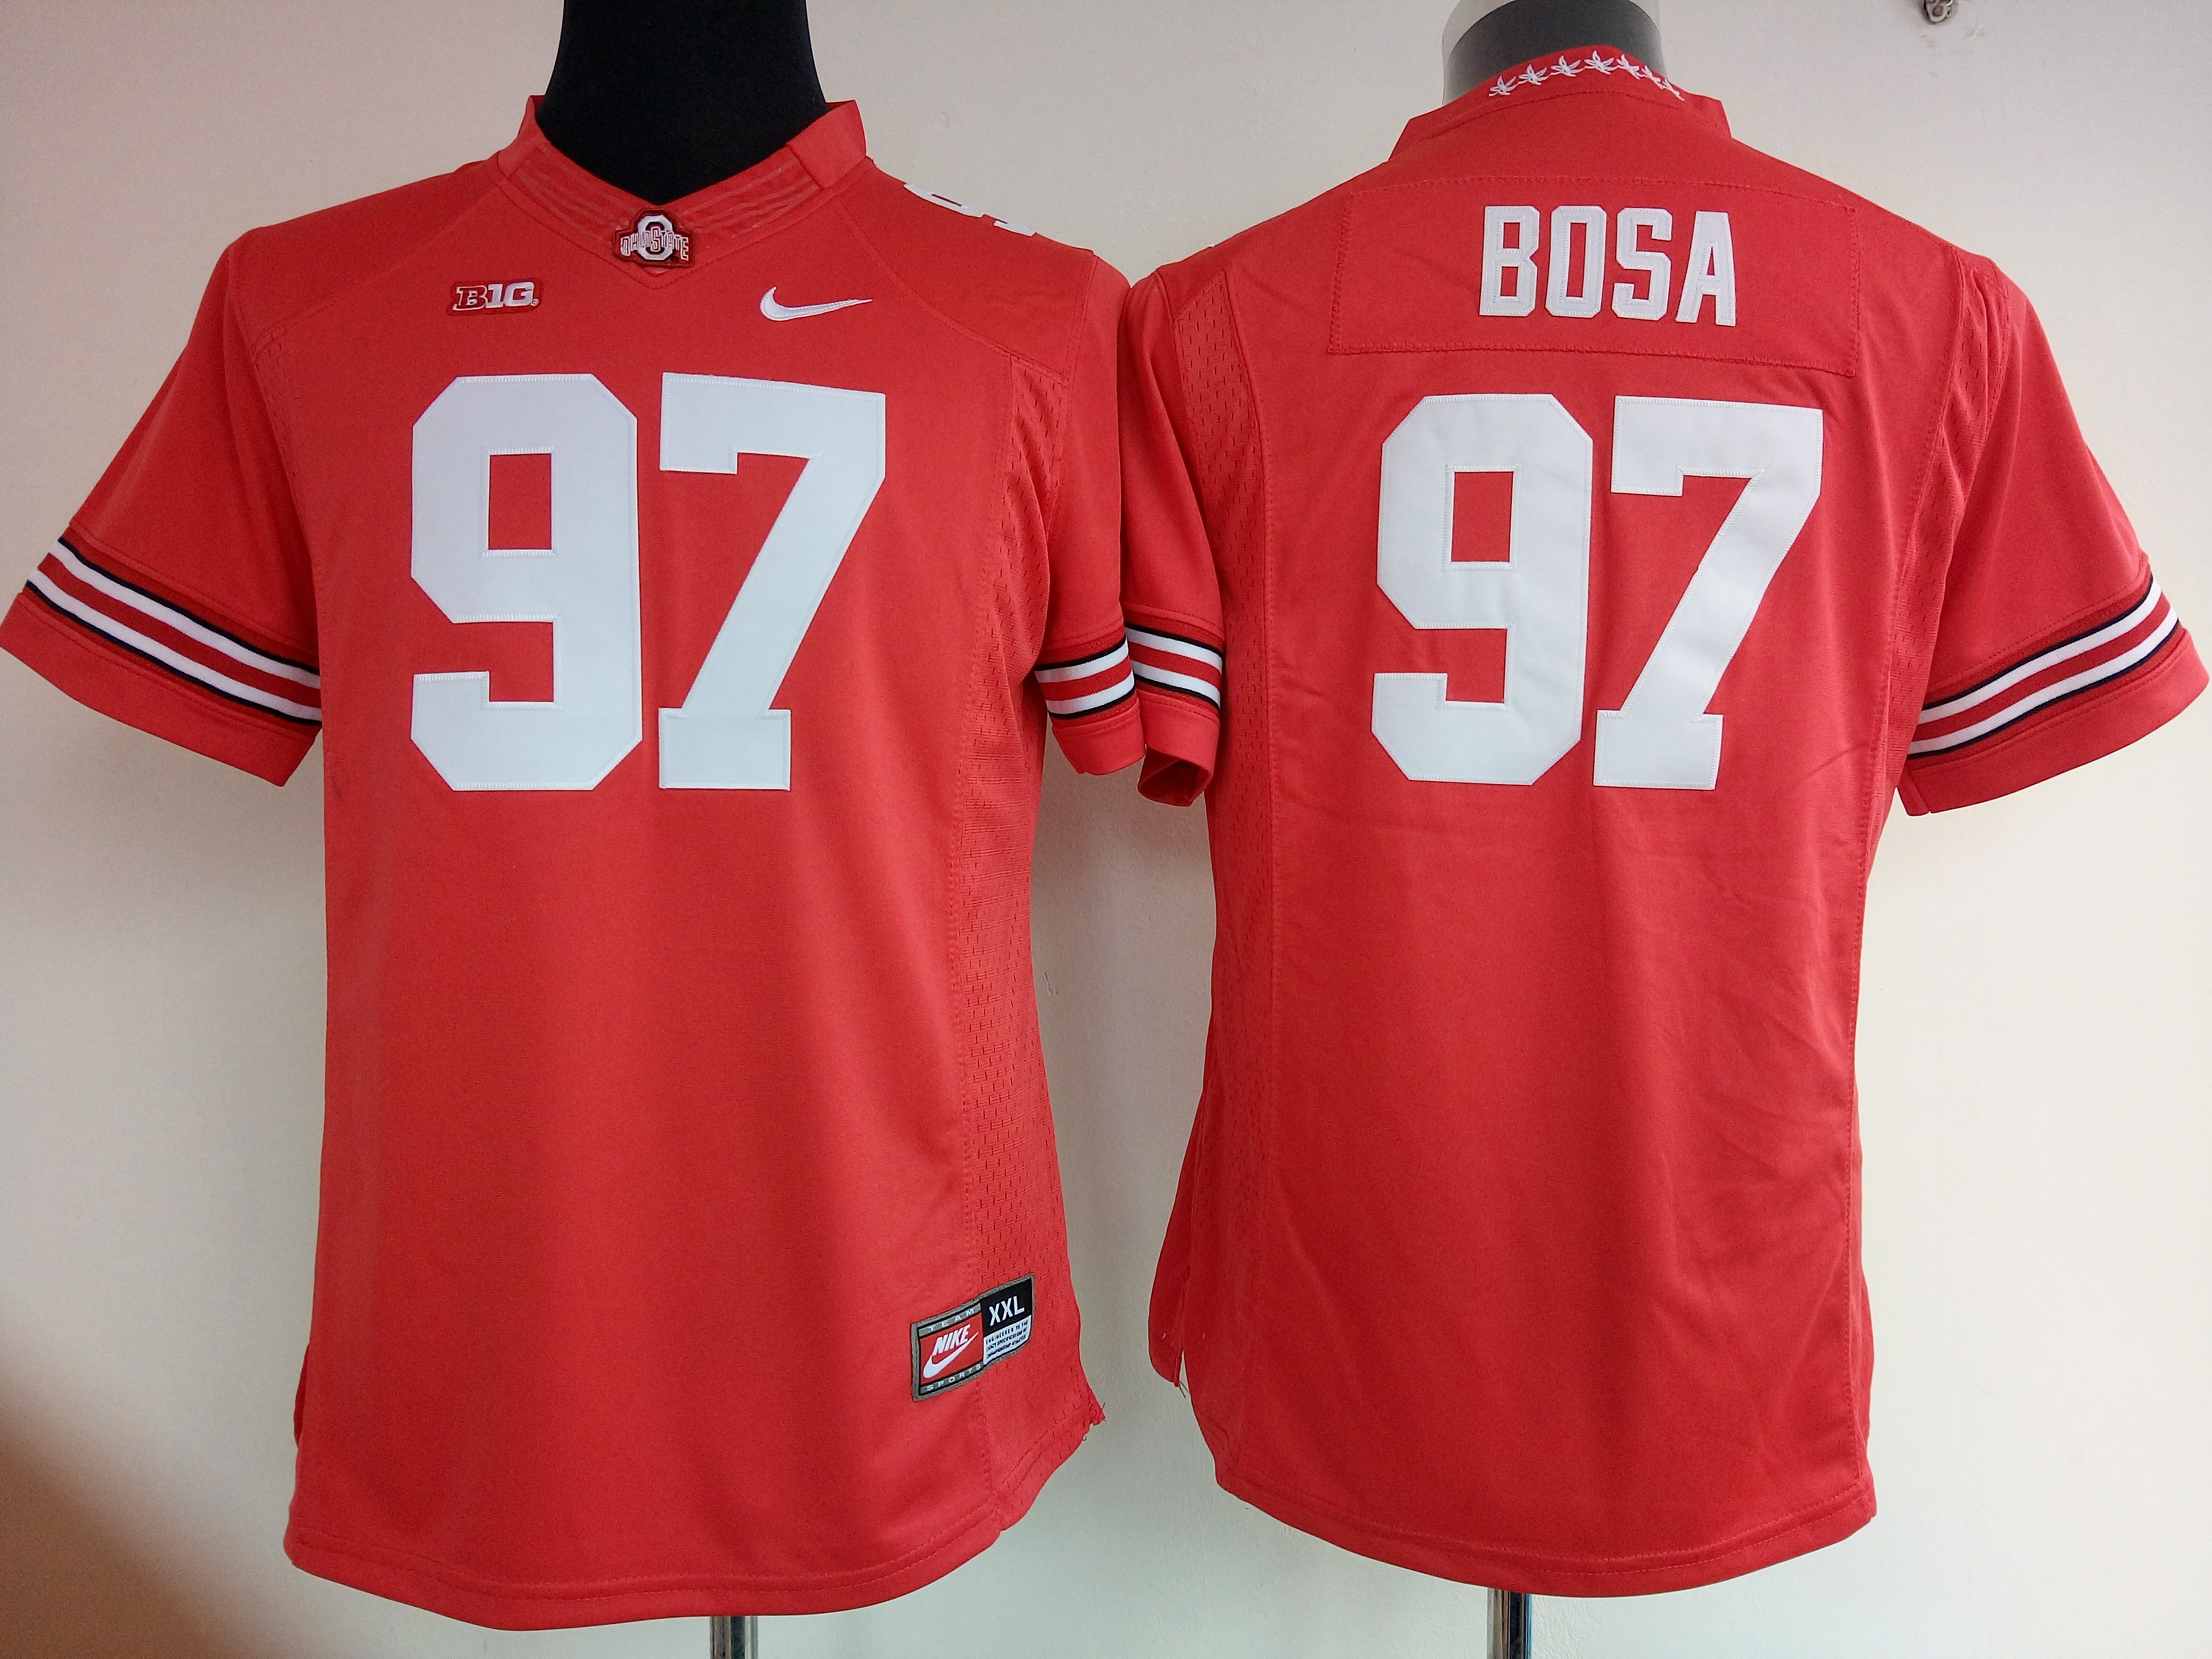 NCAA Womens Ohio State Buckeyes Red 97 bosa jerseys